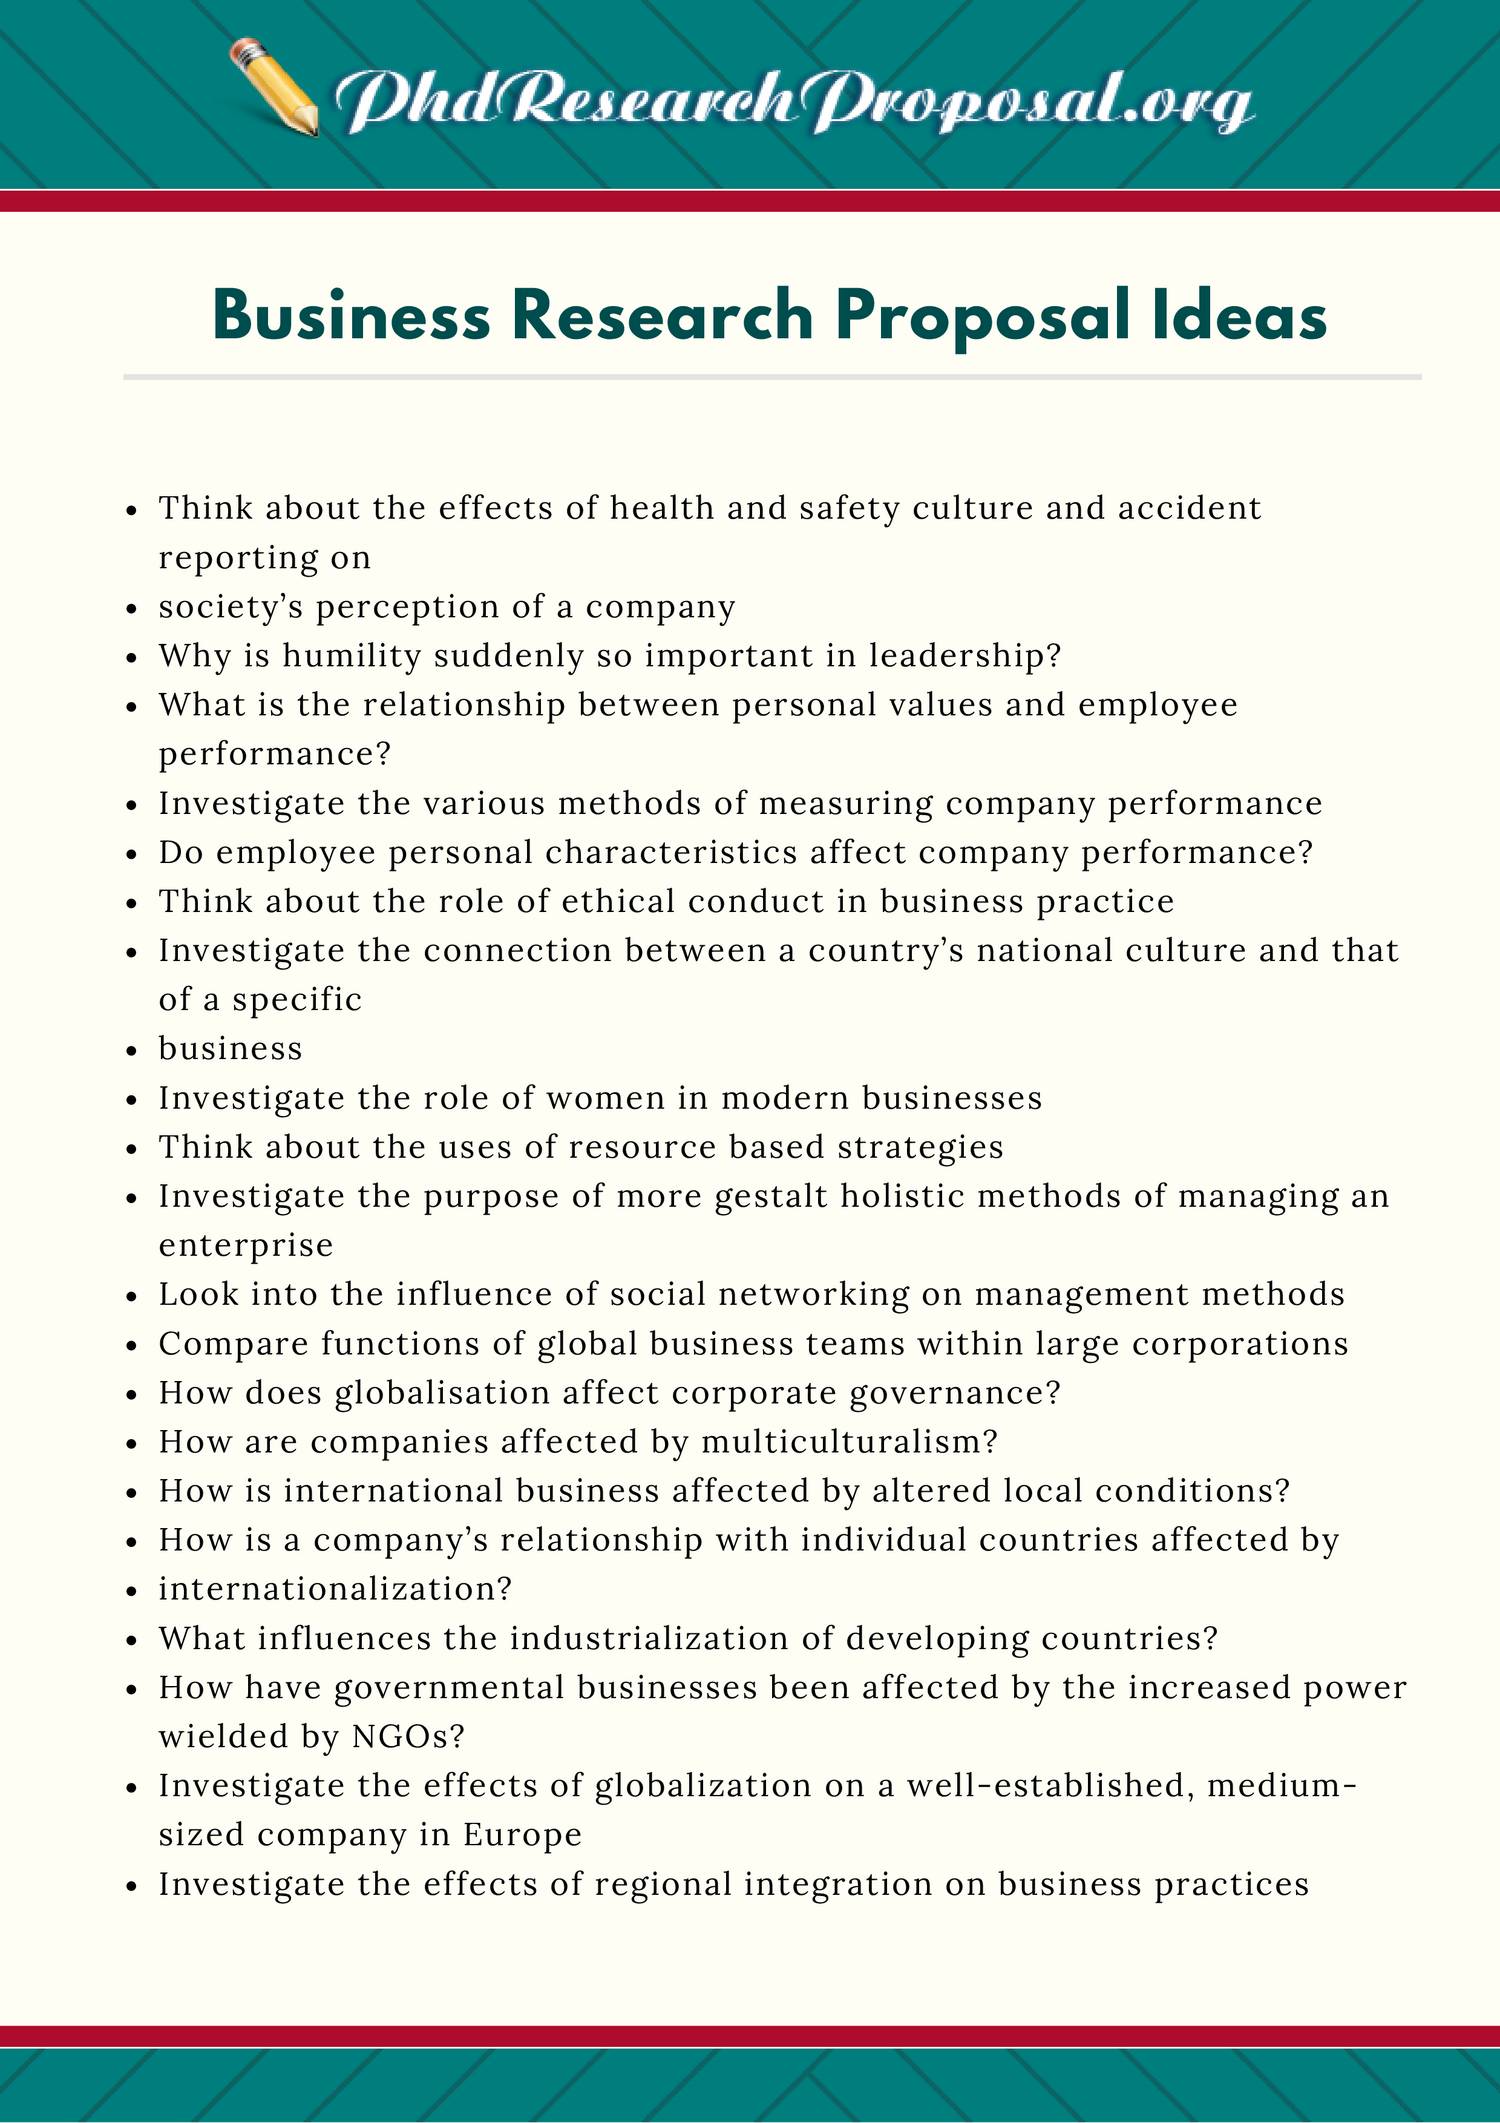 Business Research Proposal Ideas List Pdf Docdroid